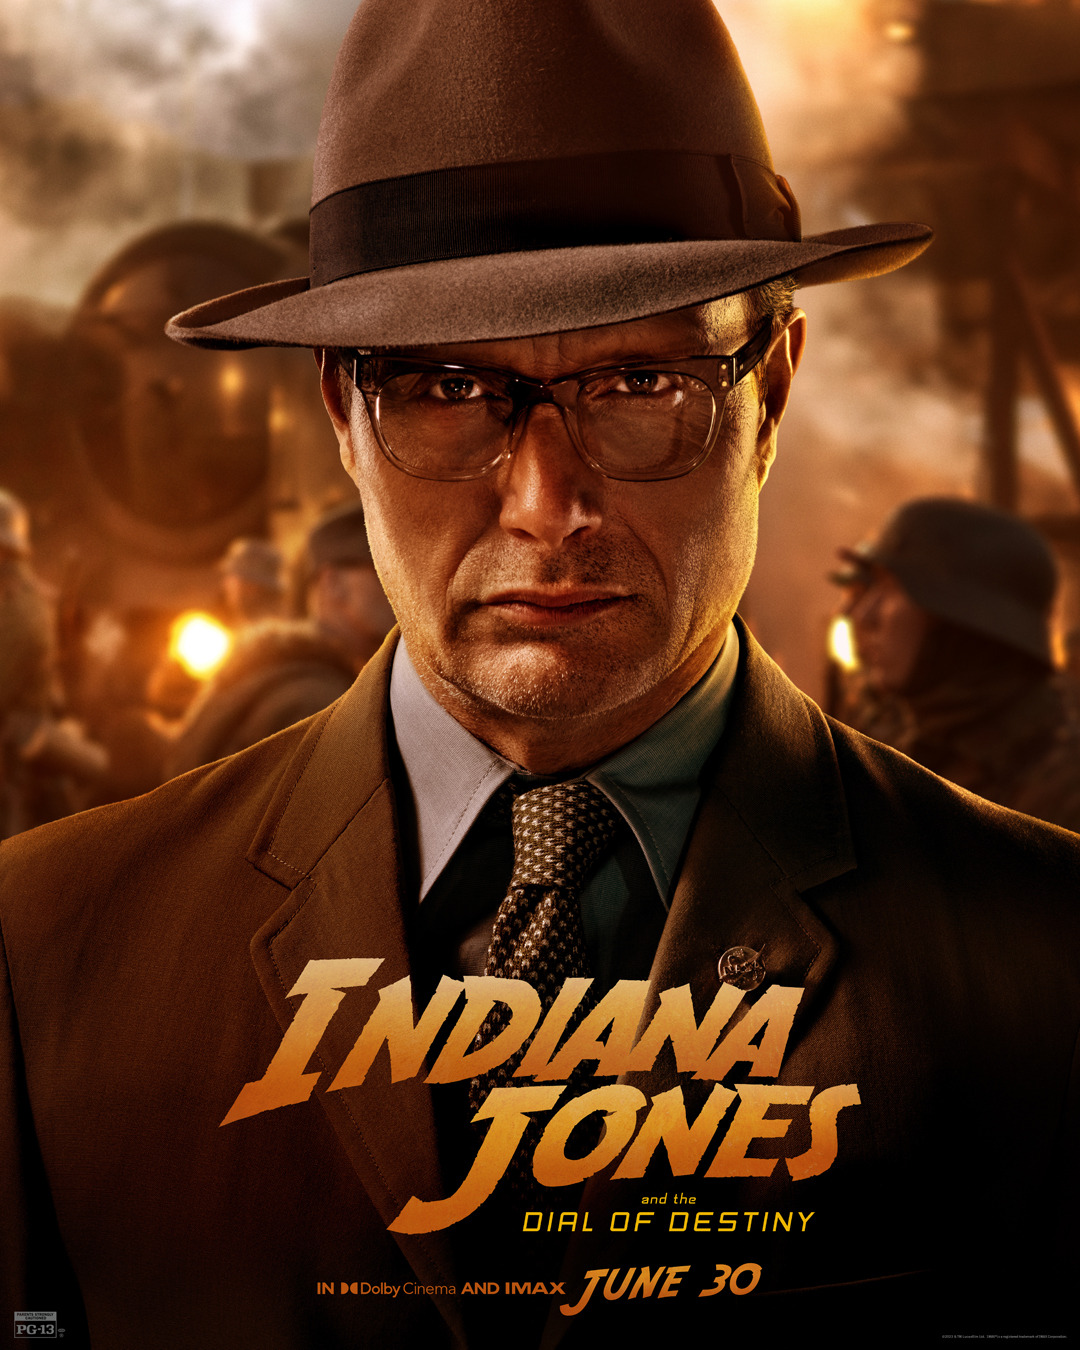 Indiana Jones 7